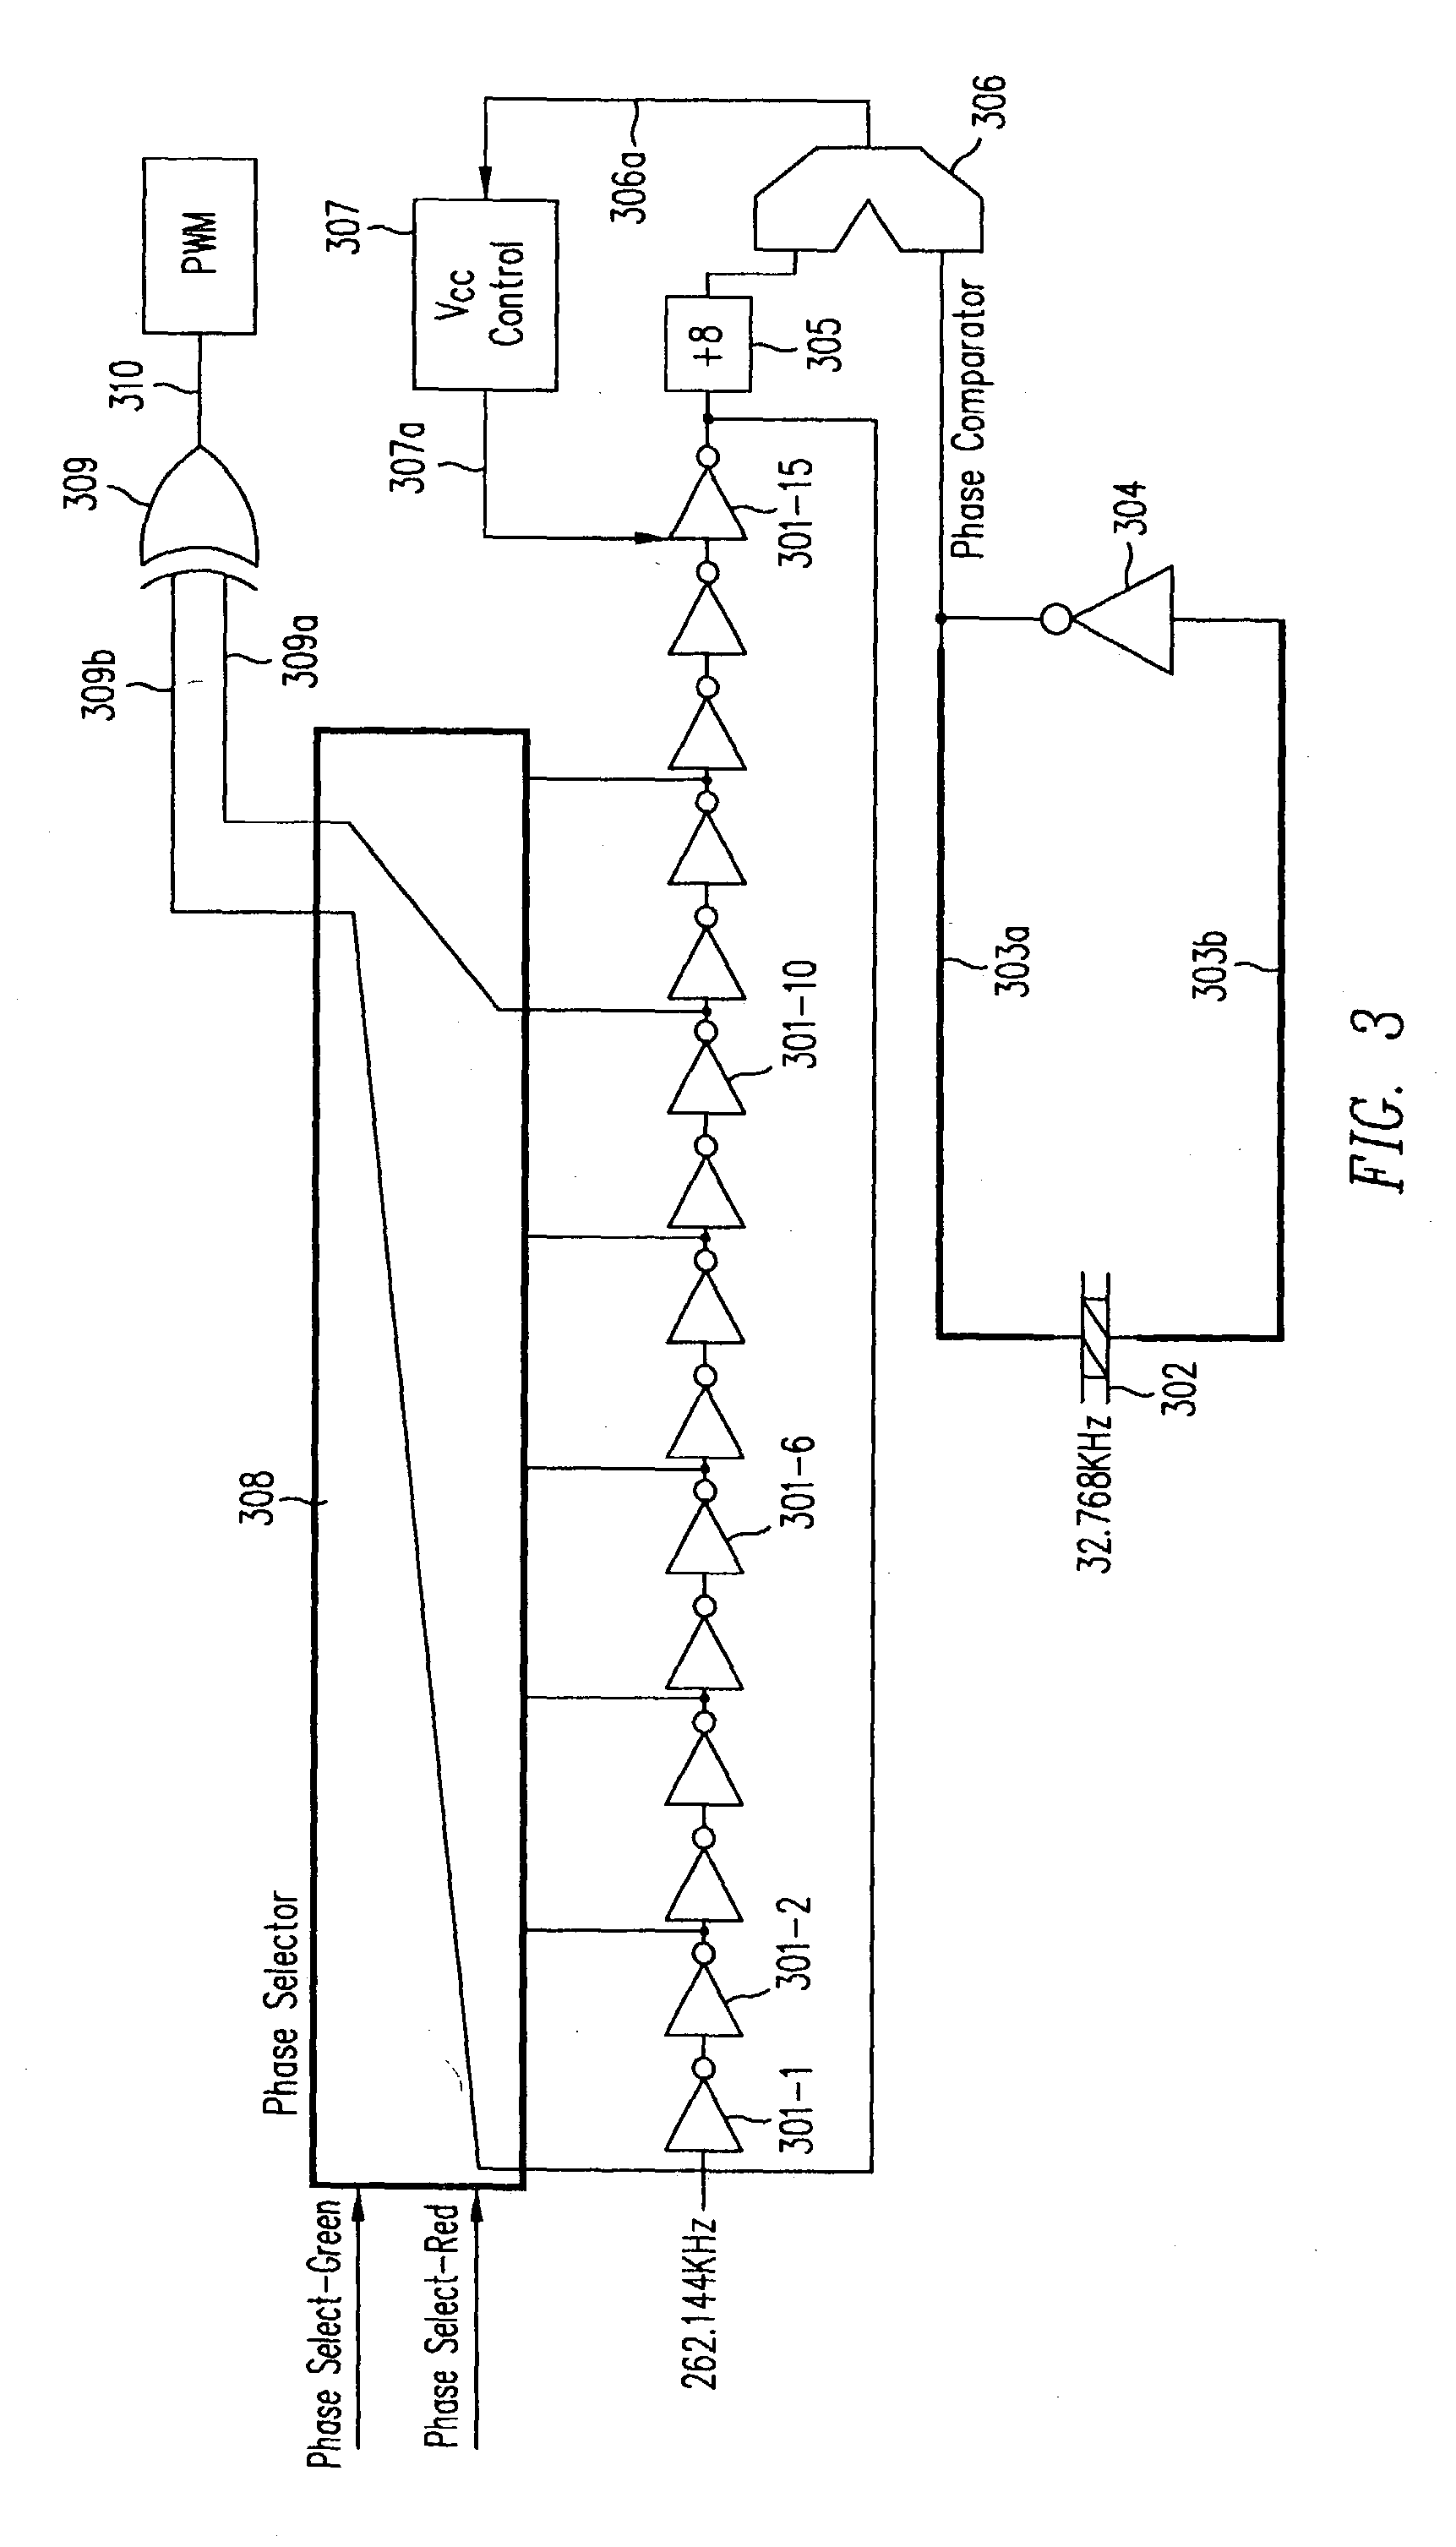 Power converter circuitry and method